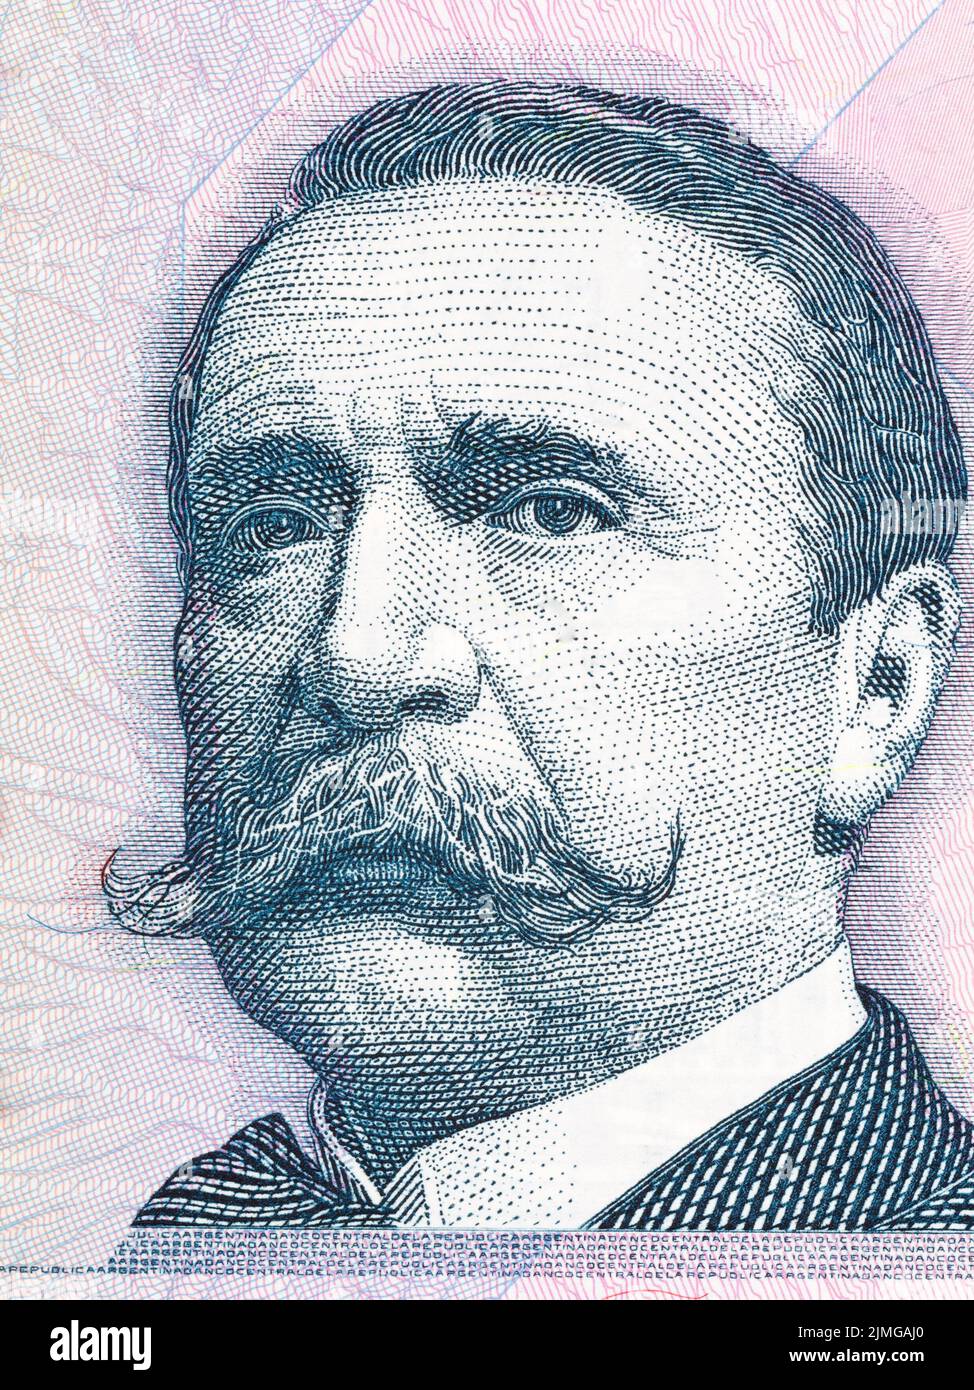 Carlos Pellegrini portrait from Argentinian money Stock Photo